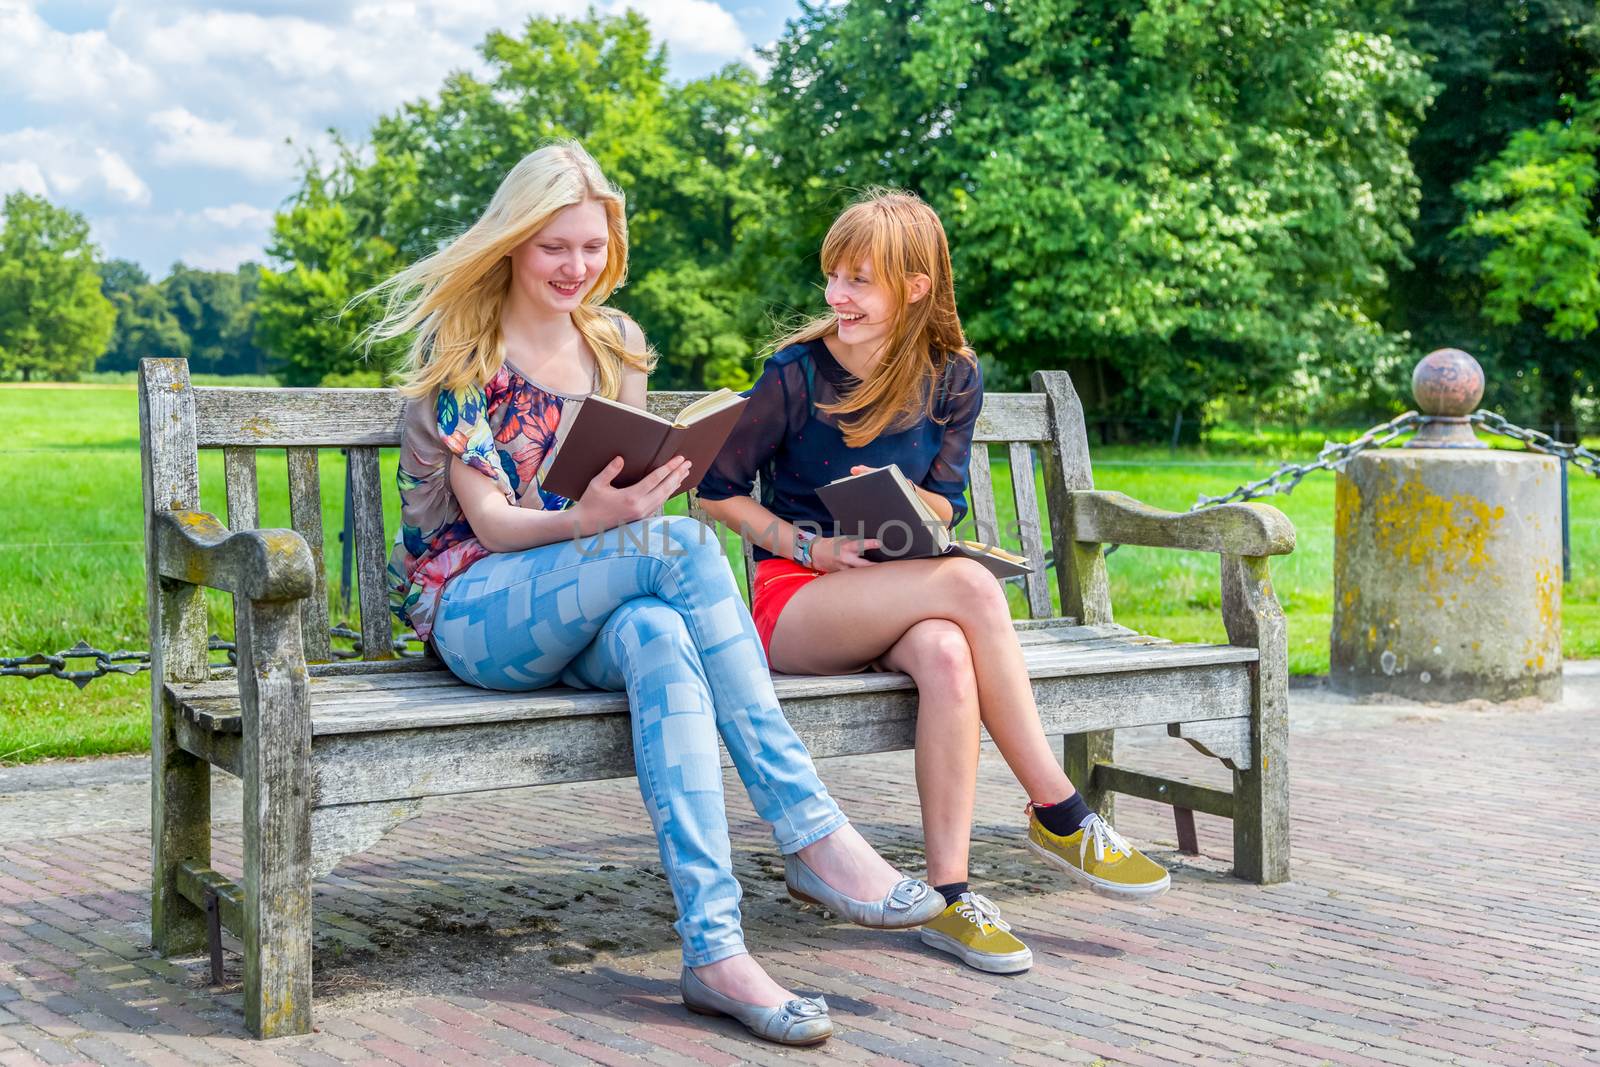 Dutch girls sitting on wooden bench in park reading books by BenSchonewille